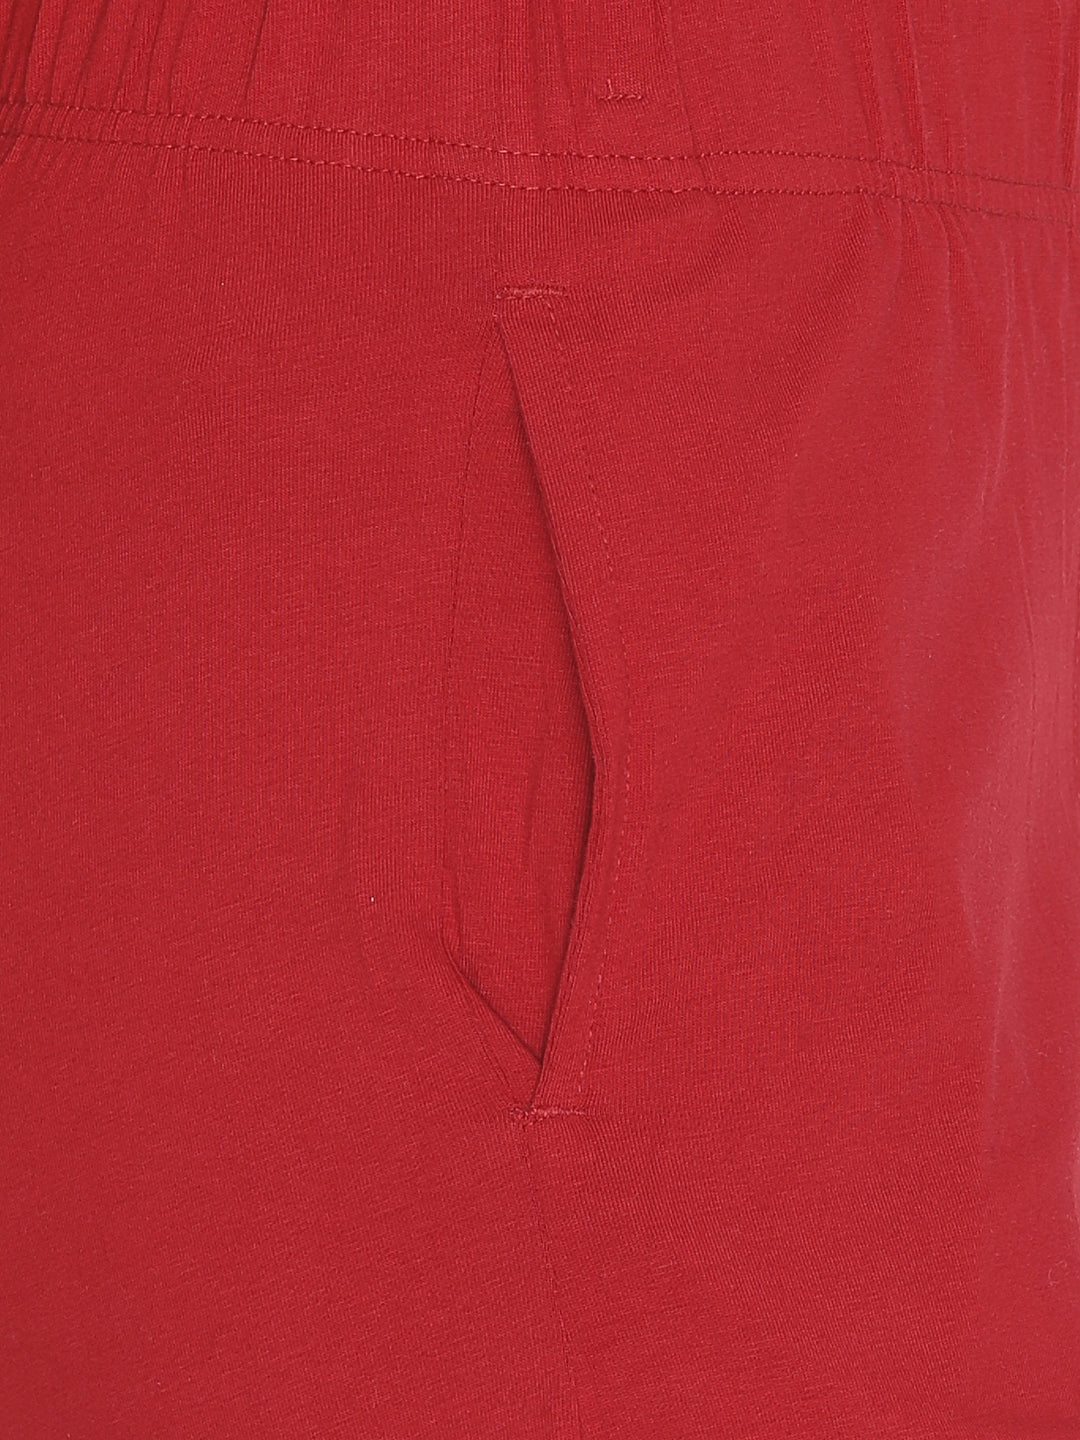 Lyra Cotton Women Maroon Color Pant-LYRAP160